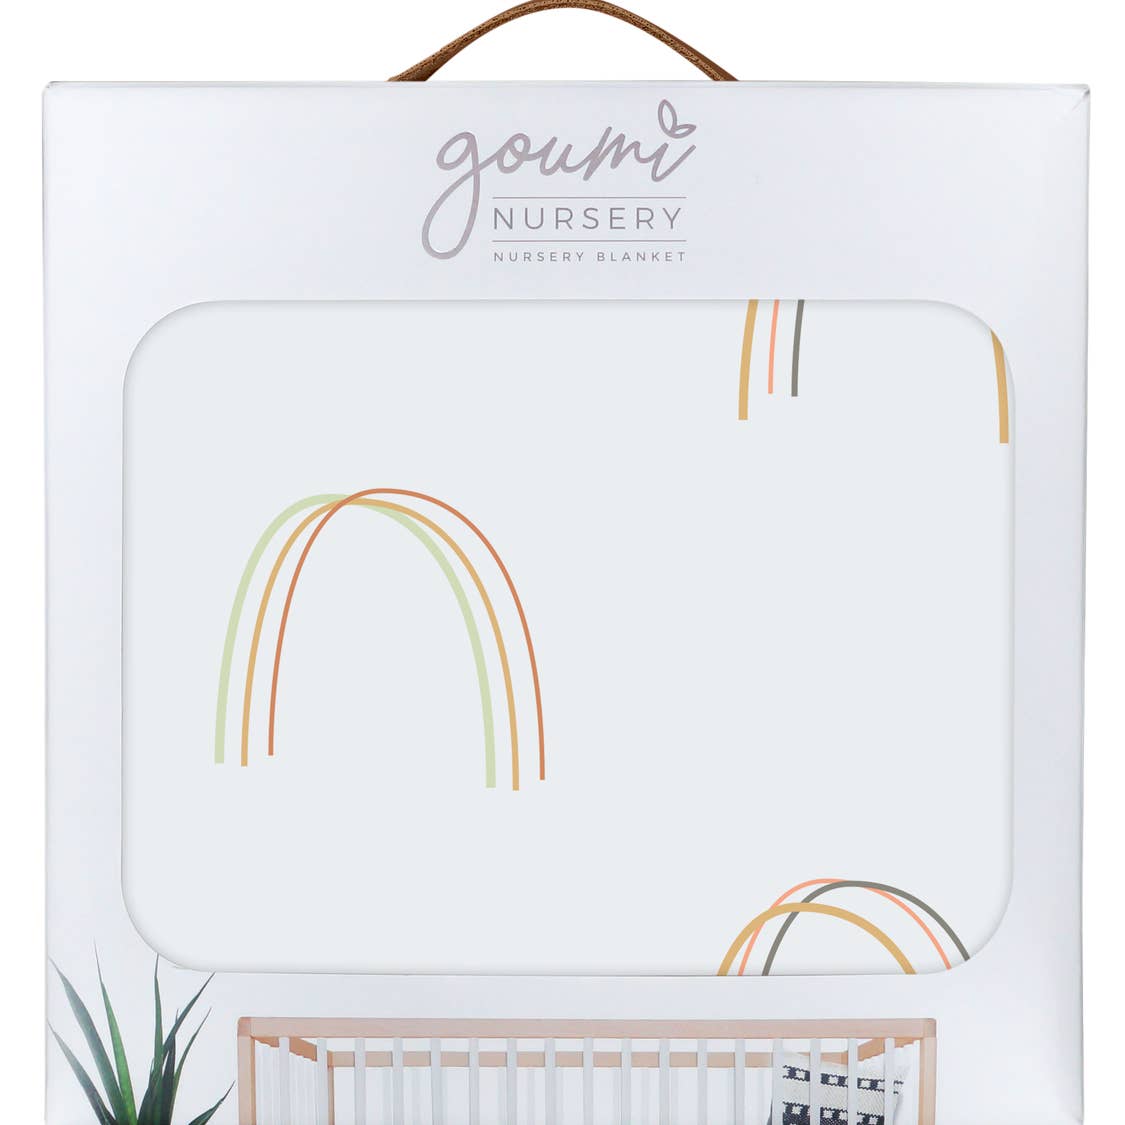 Nursery Blanket - Over The Rainbow